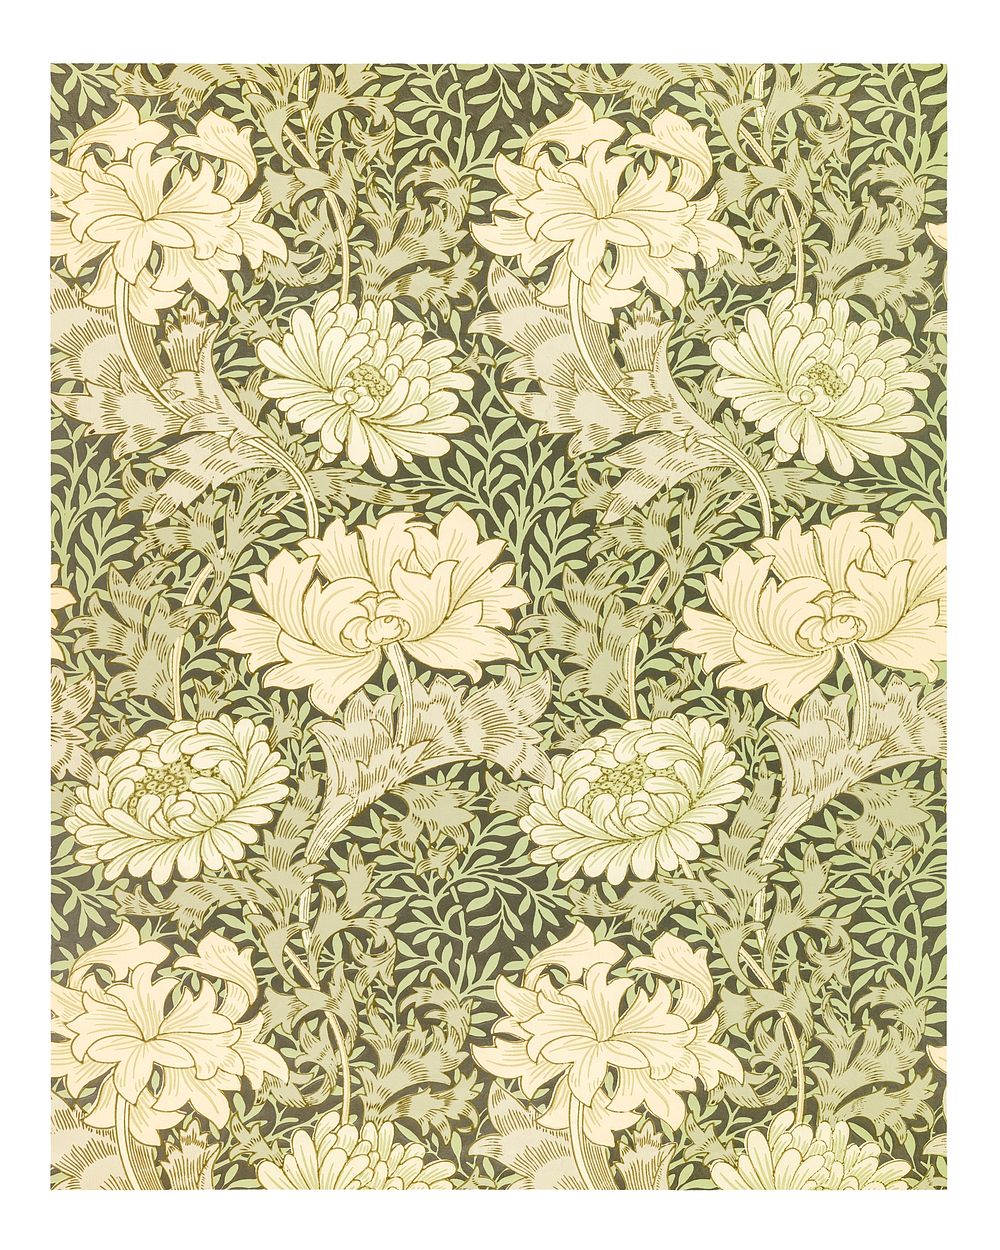 William Morris poster, vintage Chrysanthemum pattern wall decor (1877). Original from The Smithsonian Institution. Digitally…